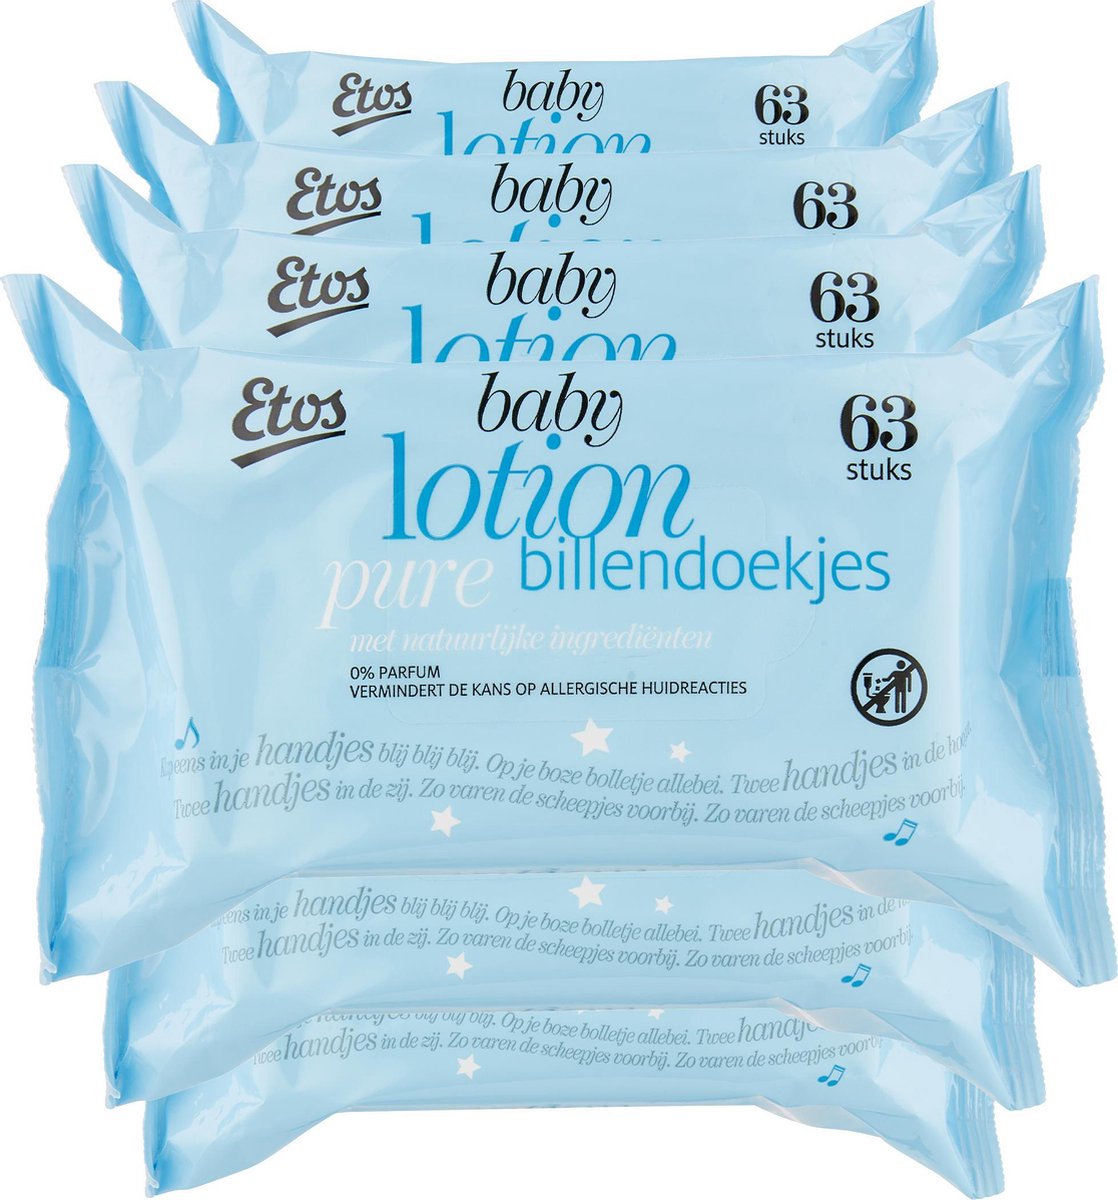 Etos Baby Lotion Billendoekjes Pure - 378 stuks (6 x 63 stuks) | bol.com